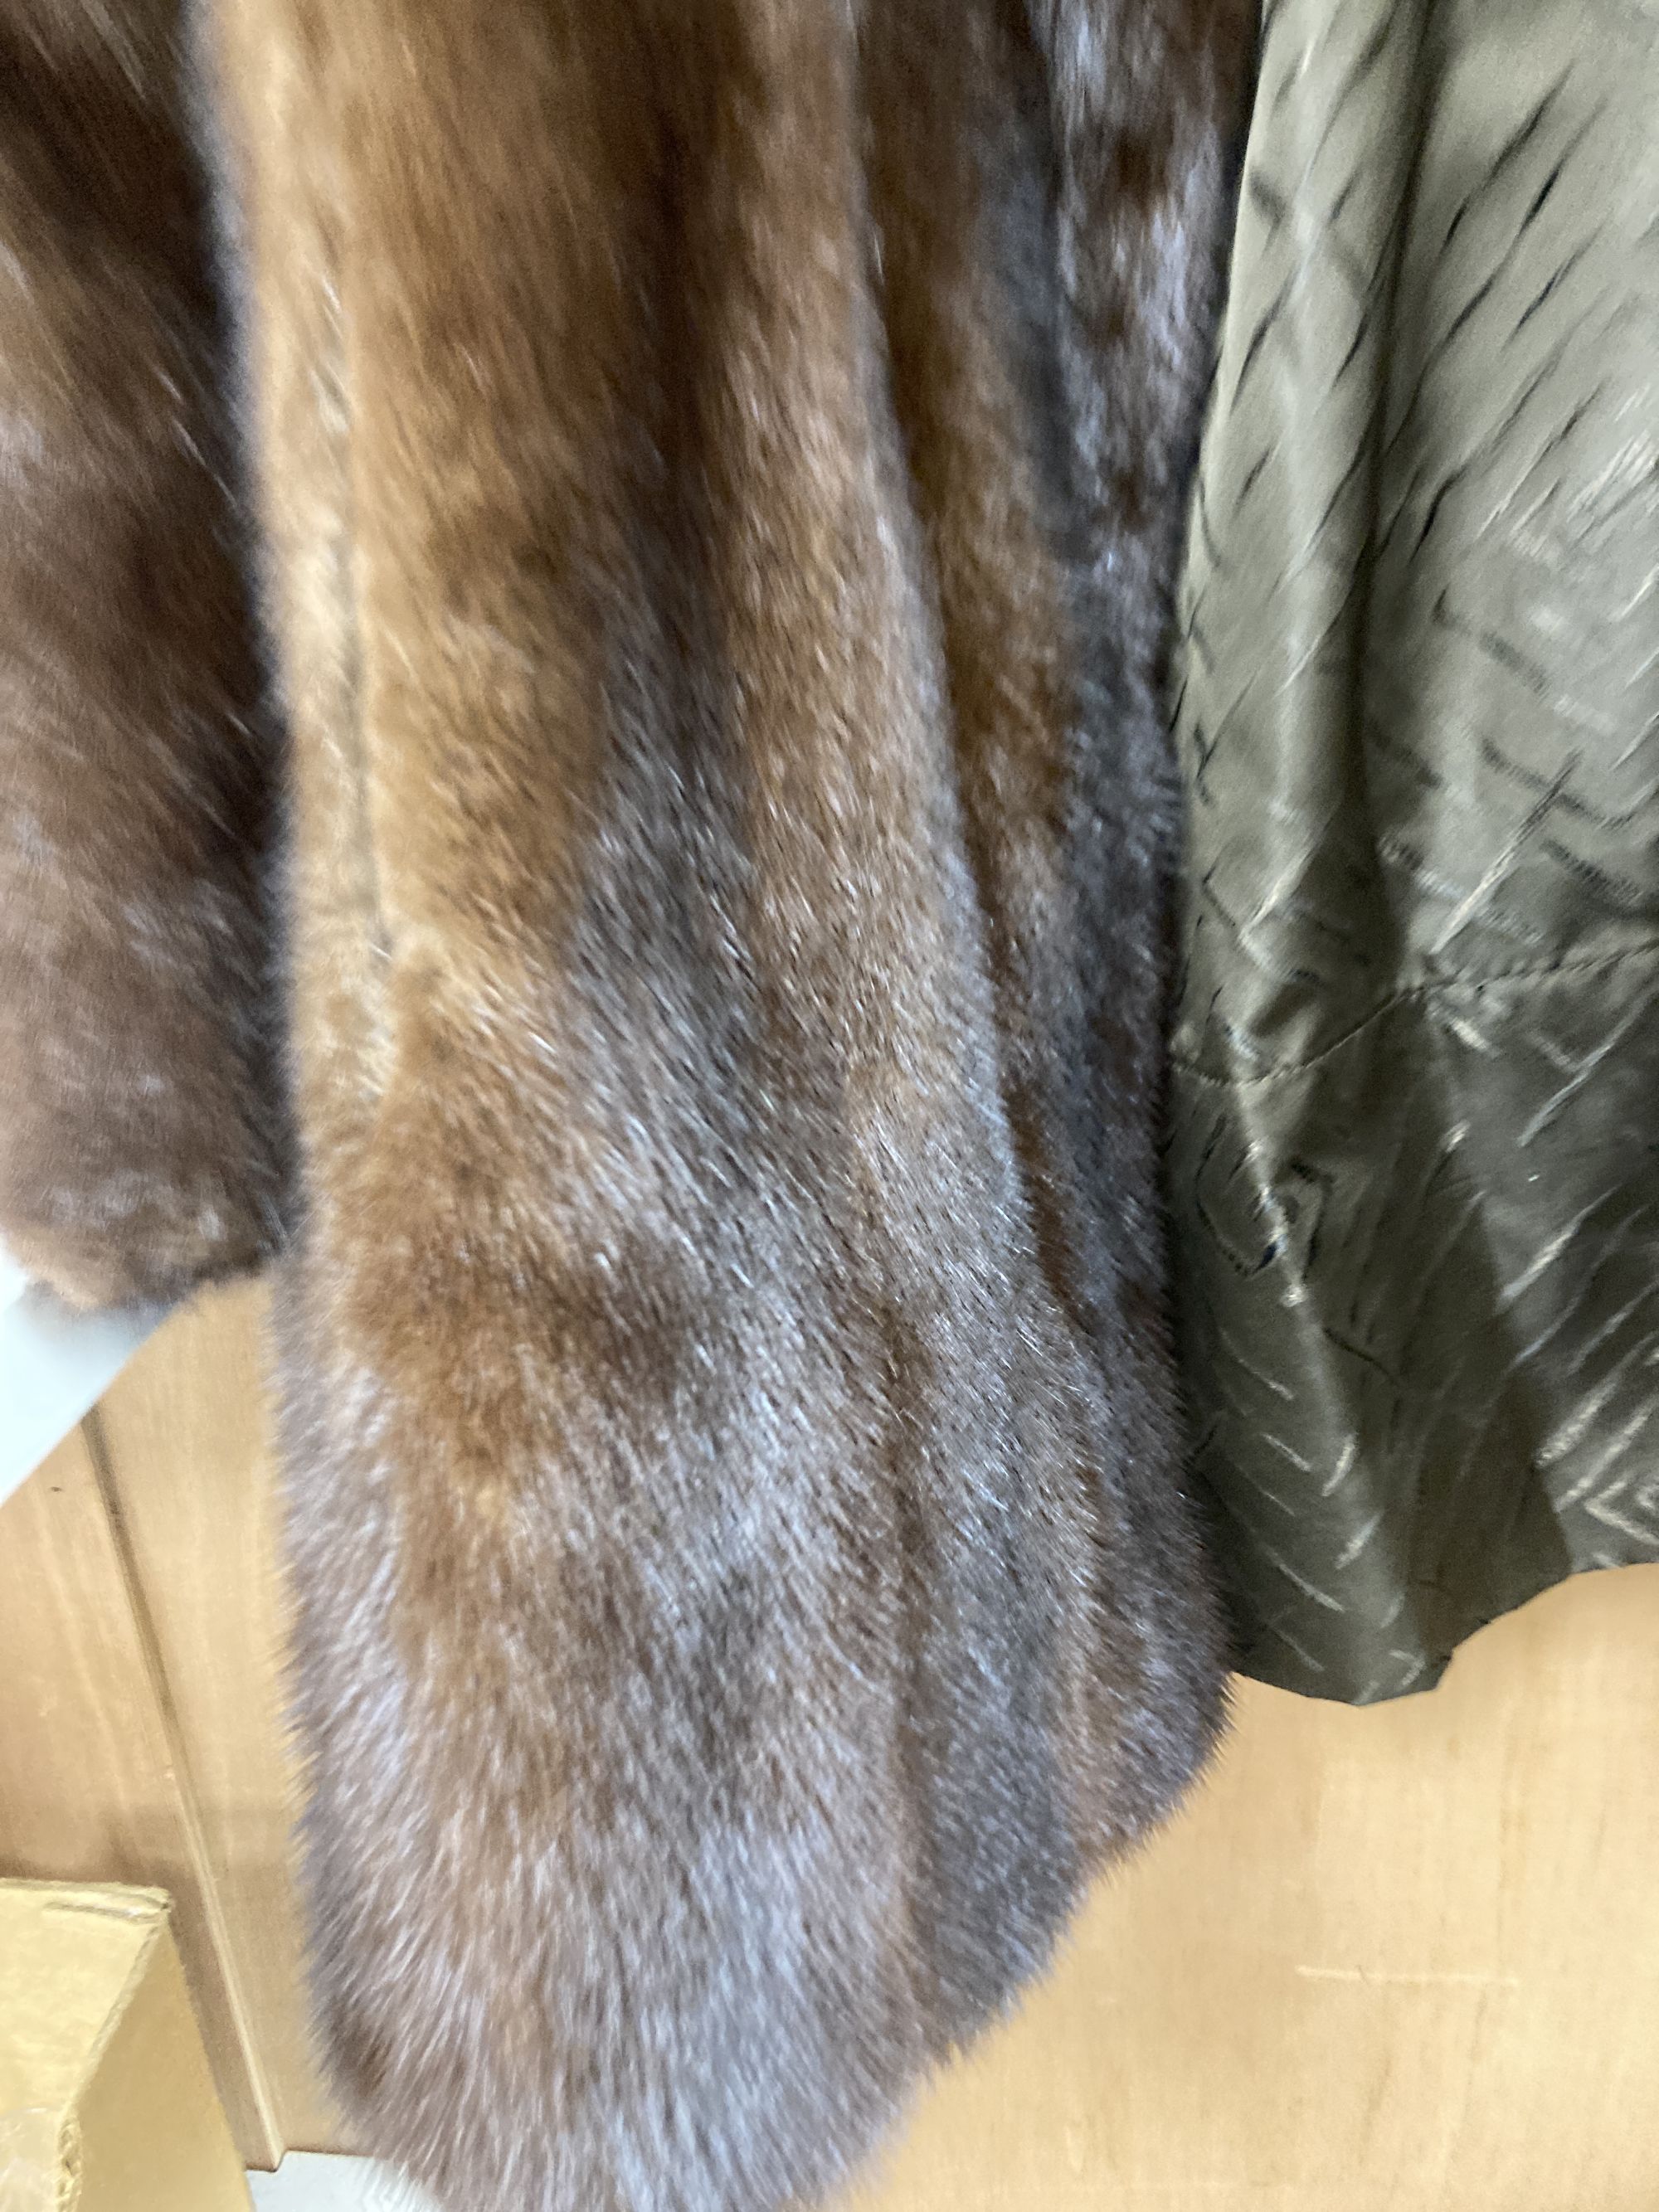 A brown mink fur coat, hat and ties